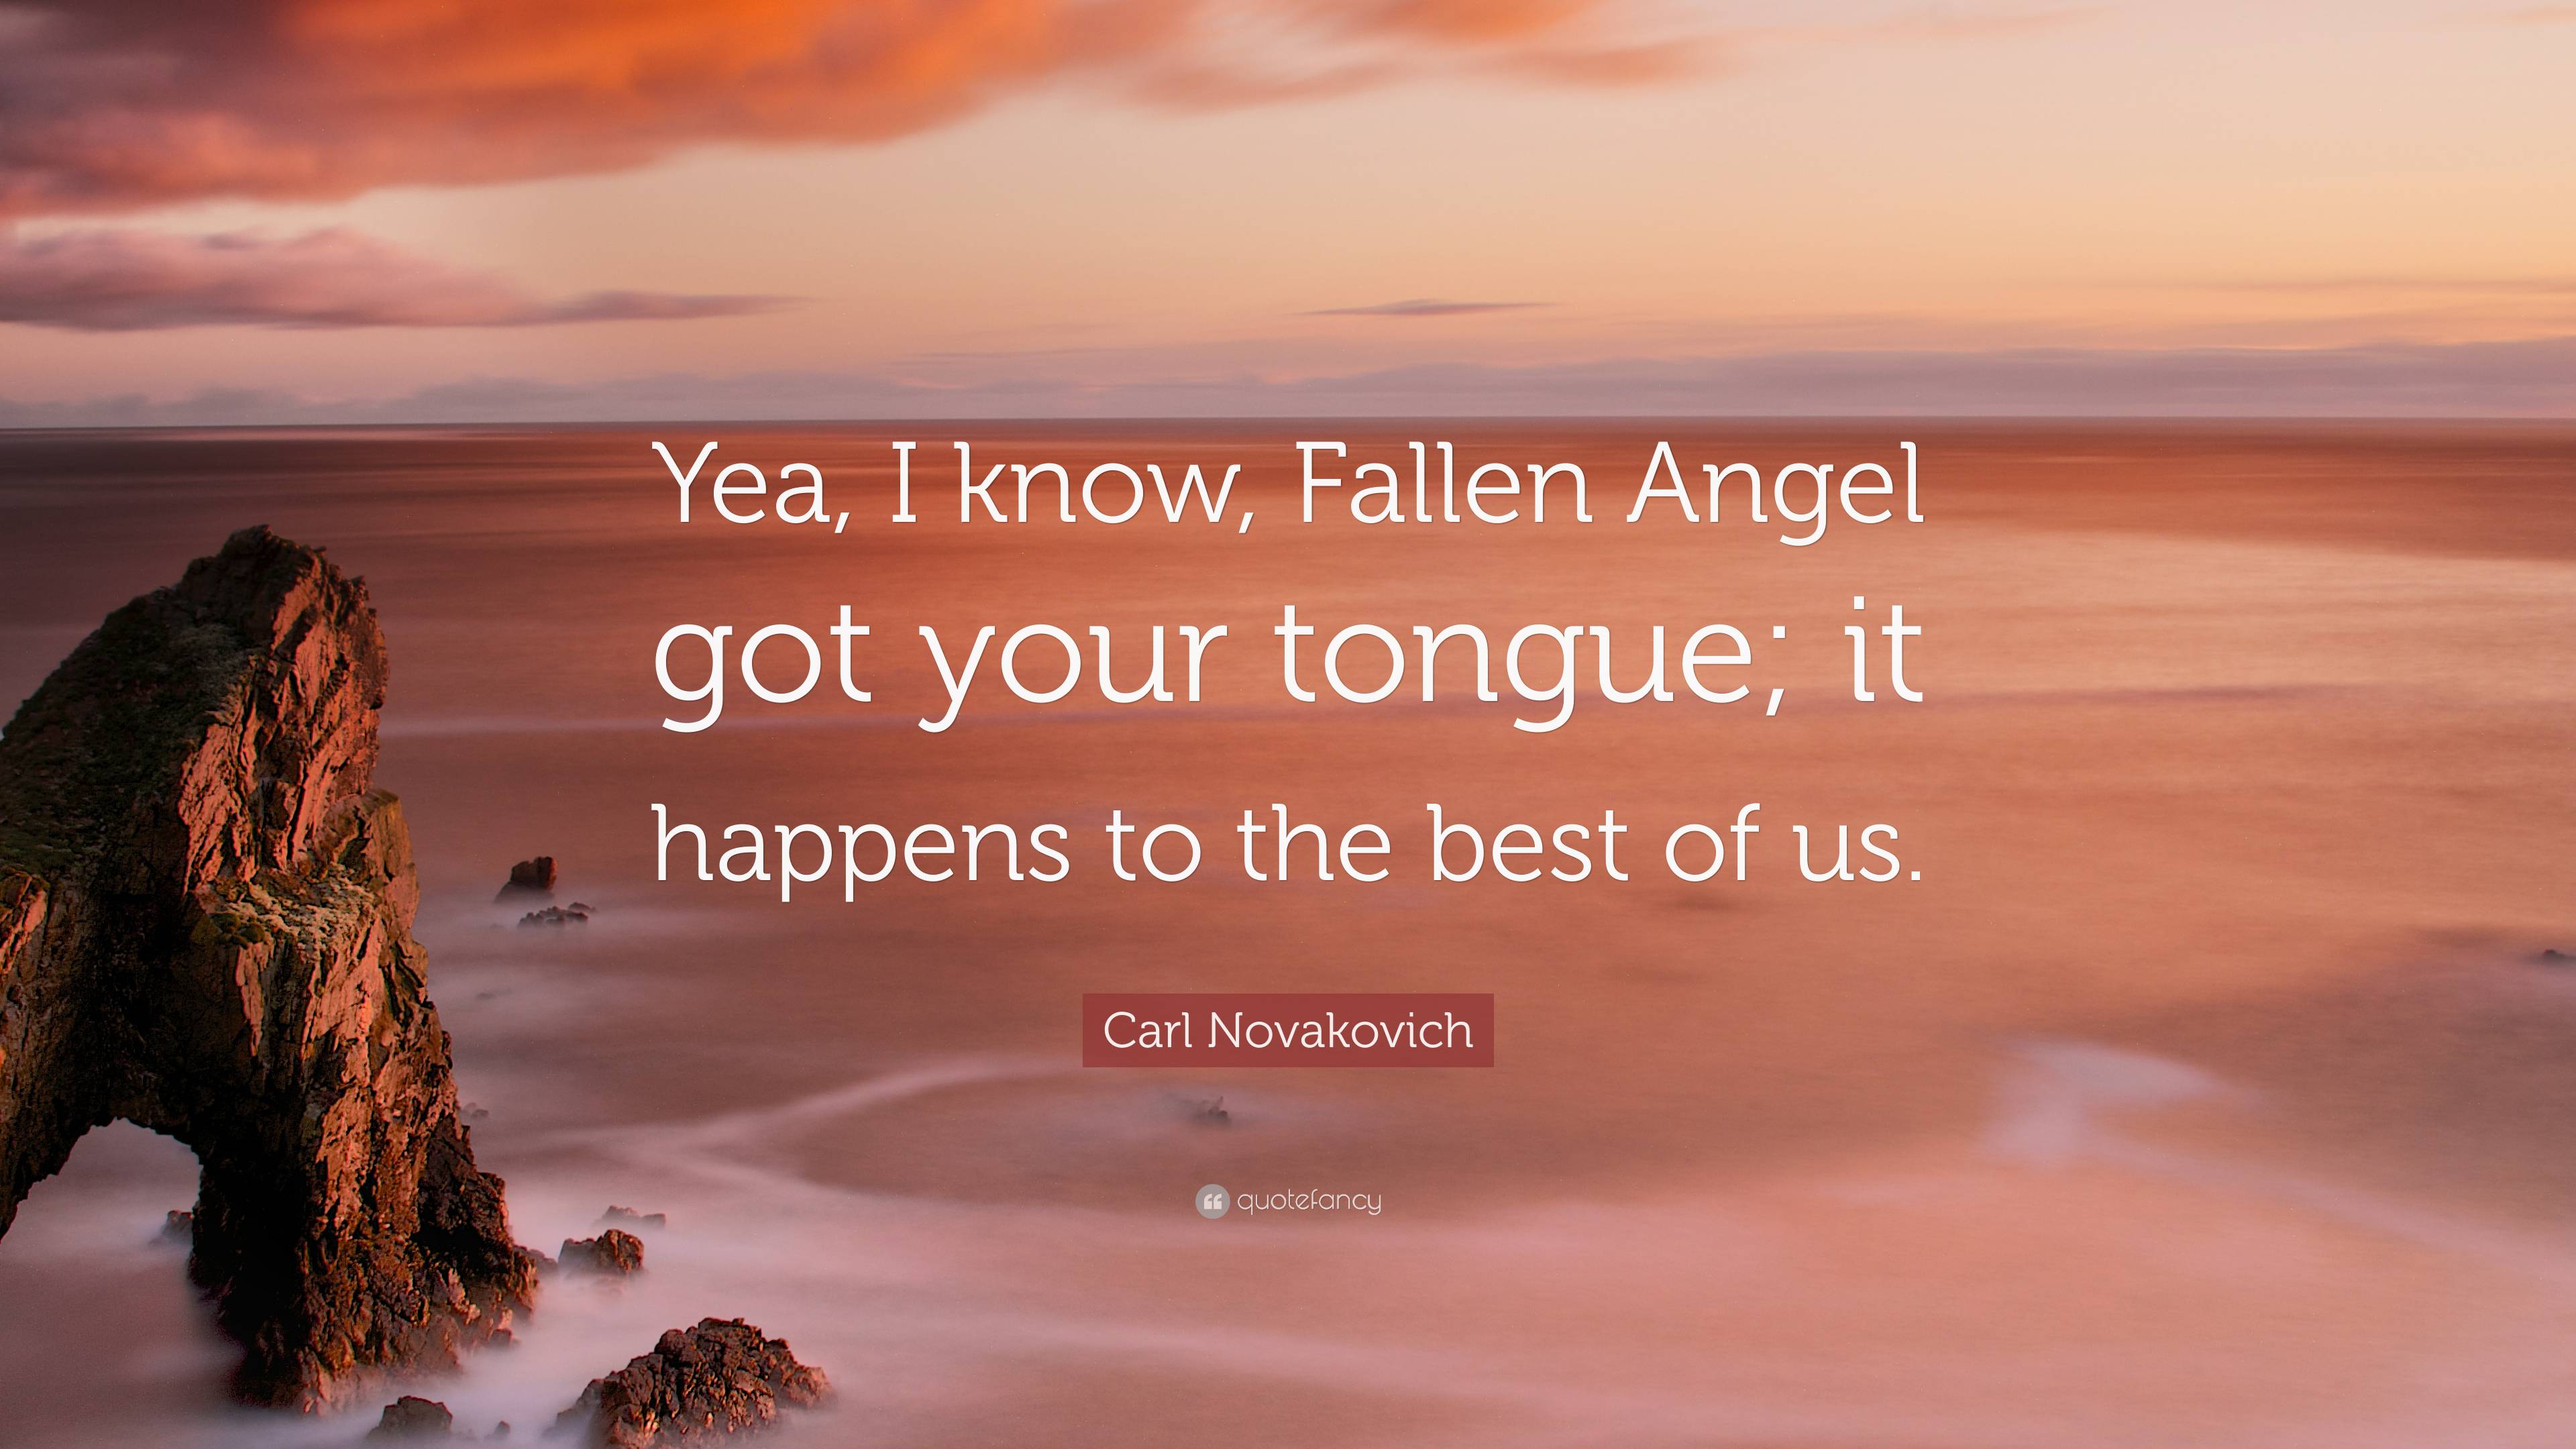 Carl Novakovich Quote: “Yea, I know, Fallen Angel got your tongue